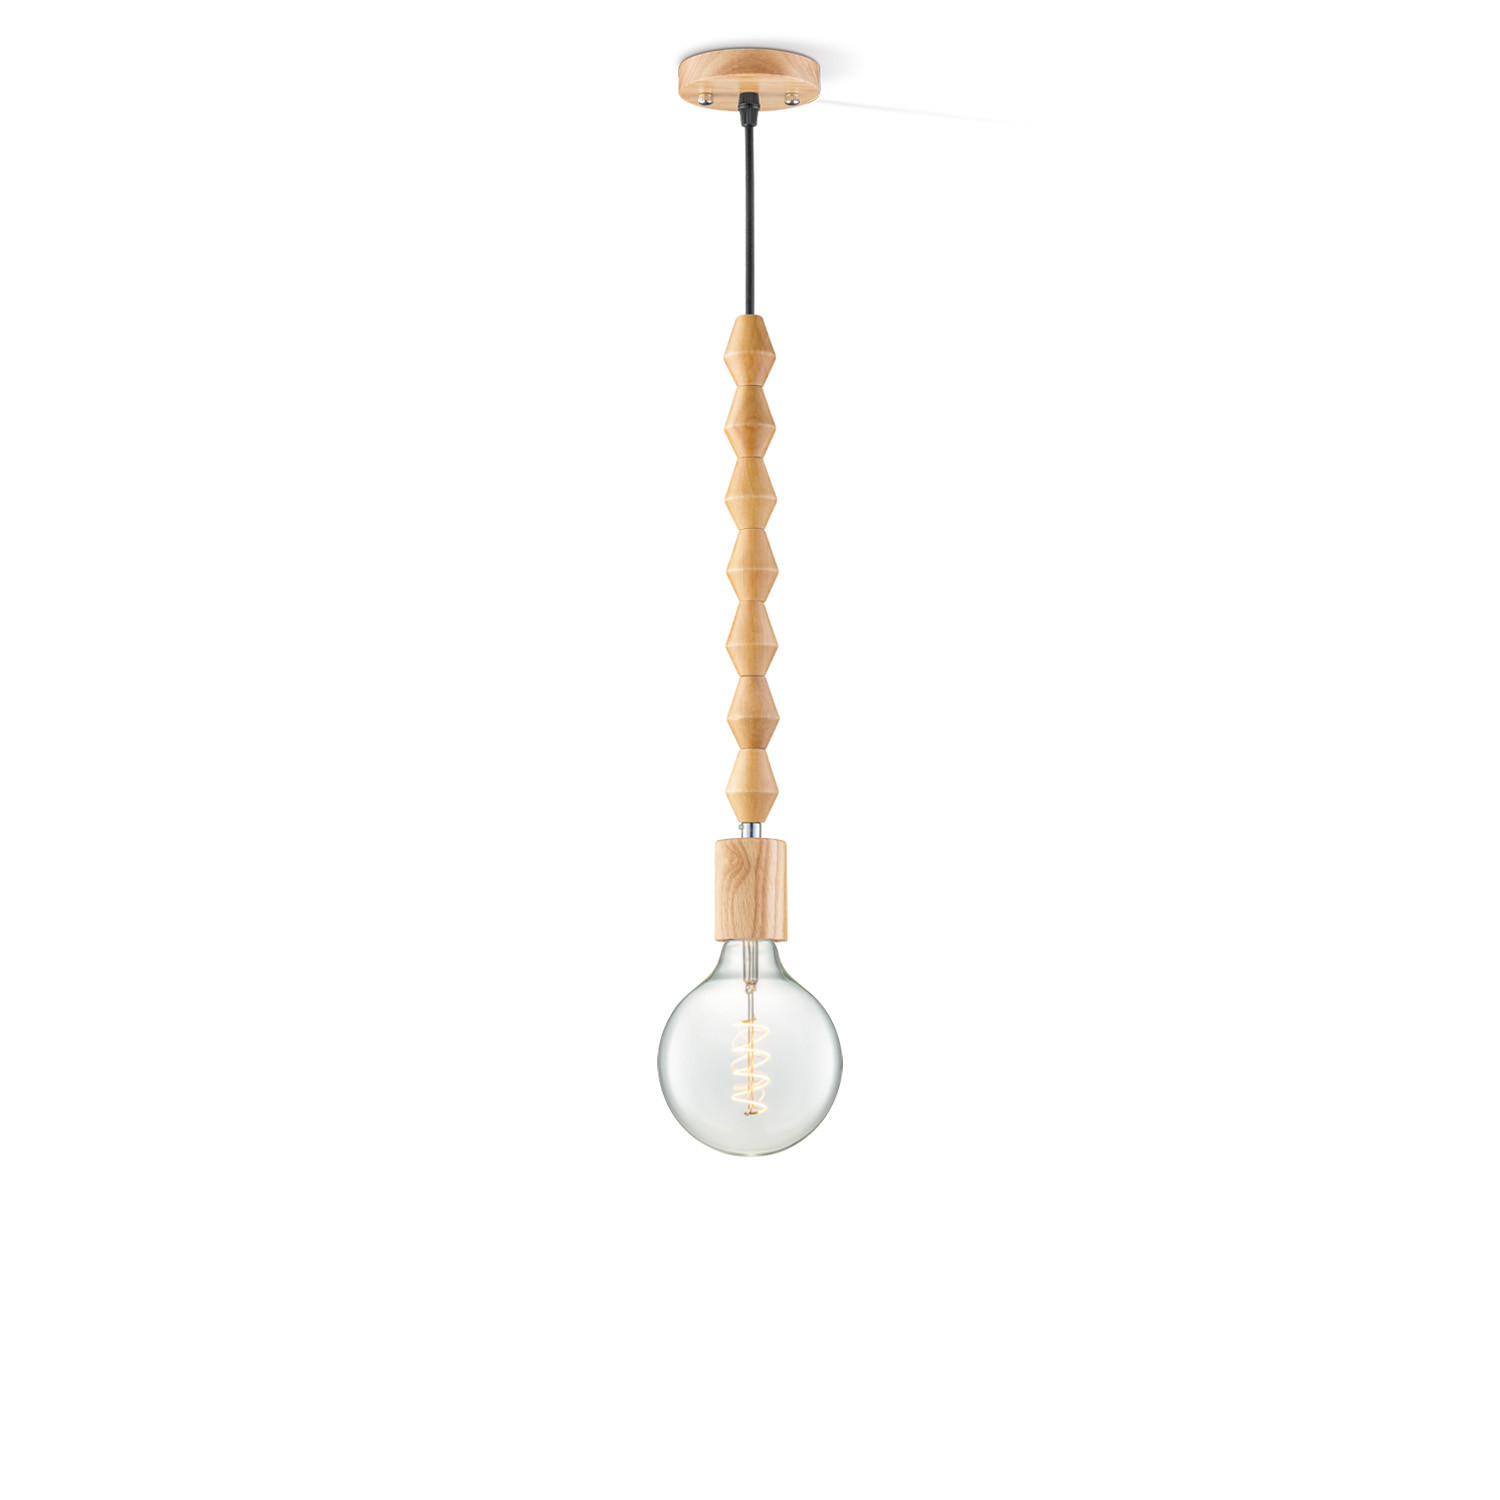 Light depot - hanglamp Dana Globe Spiral g125 - helder - Outlet